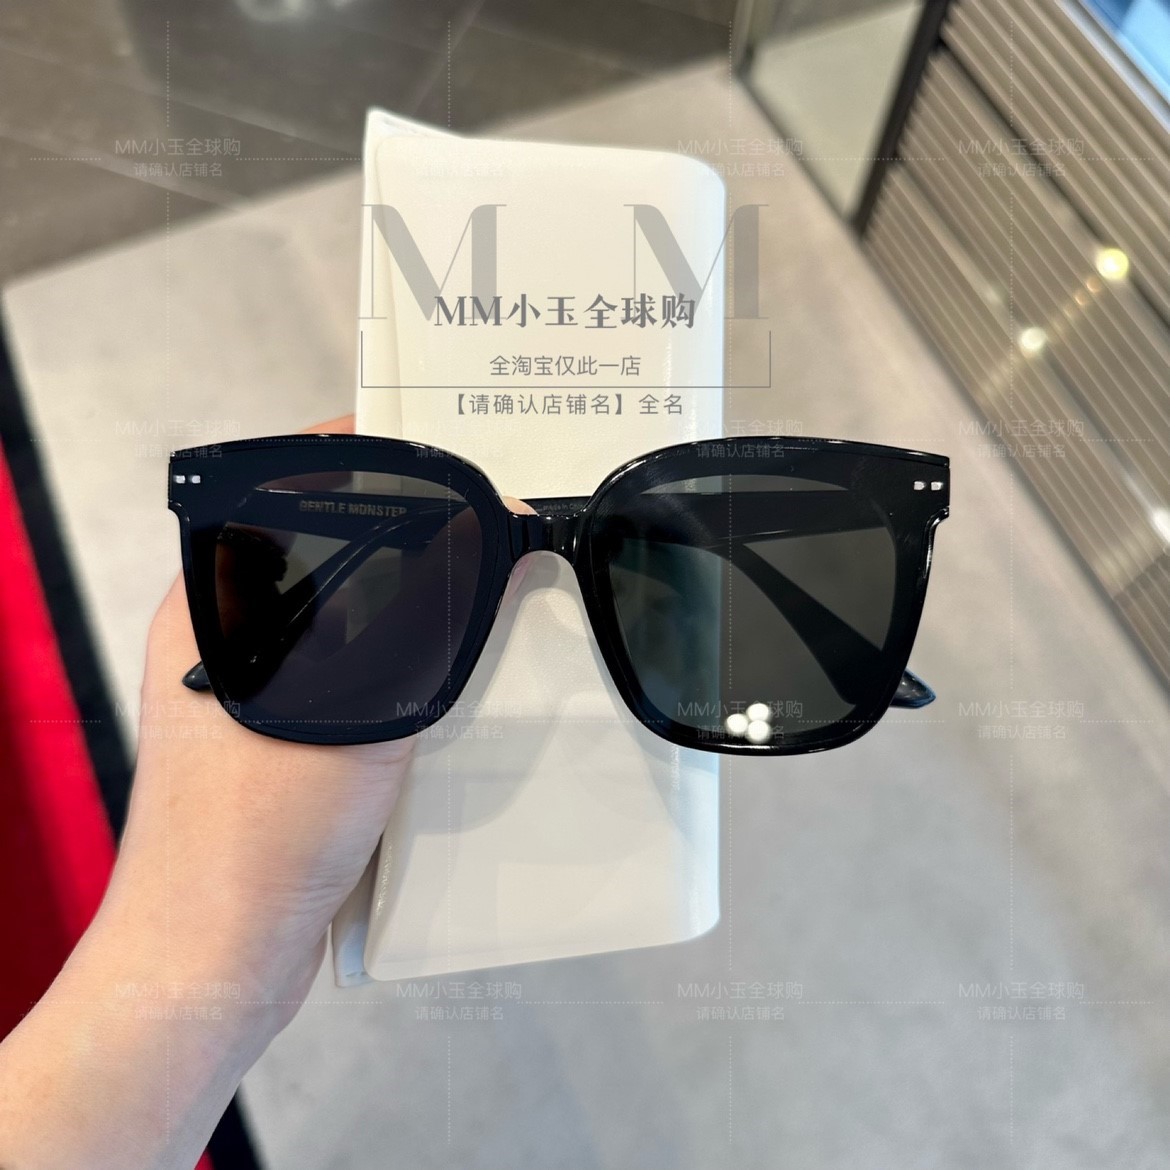 【LOCELL.S】 GM GENTLE MONSTER墨镜太阳眼镜板材墨镜潮流时尚